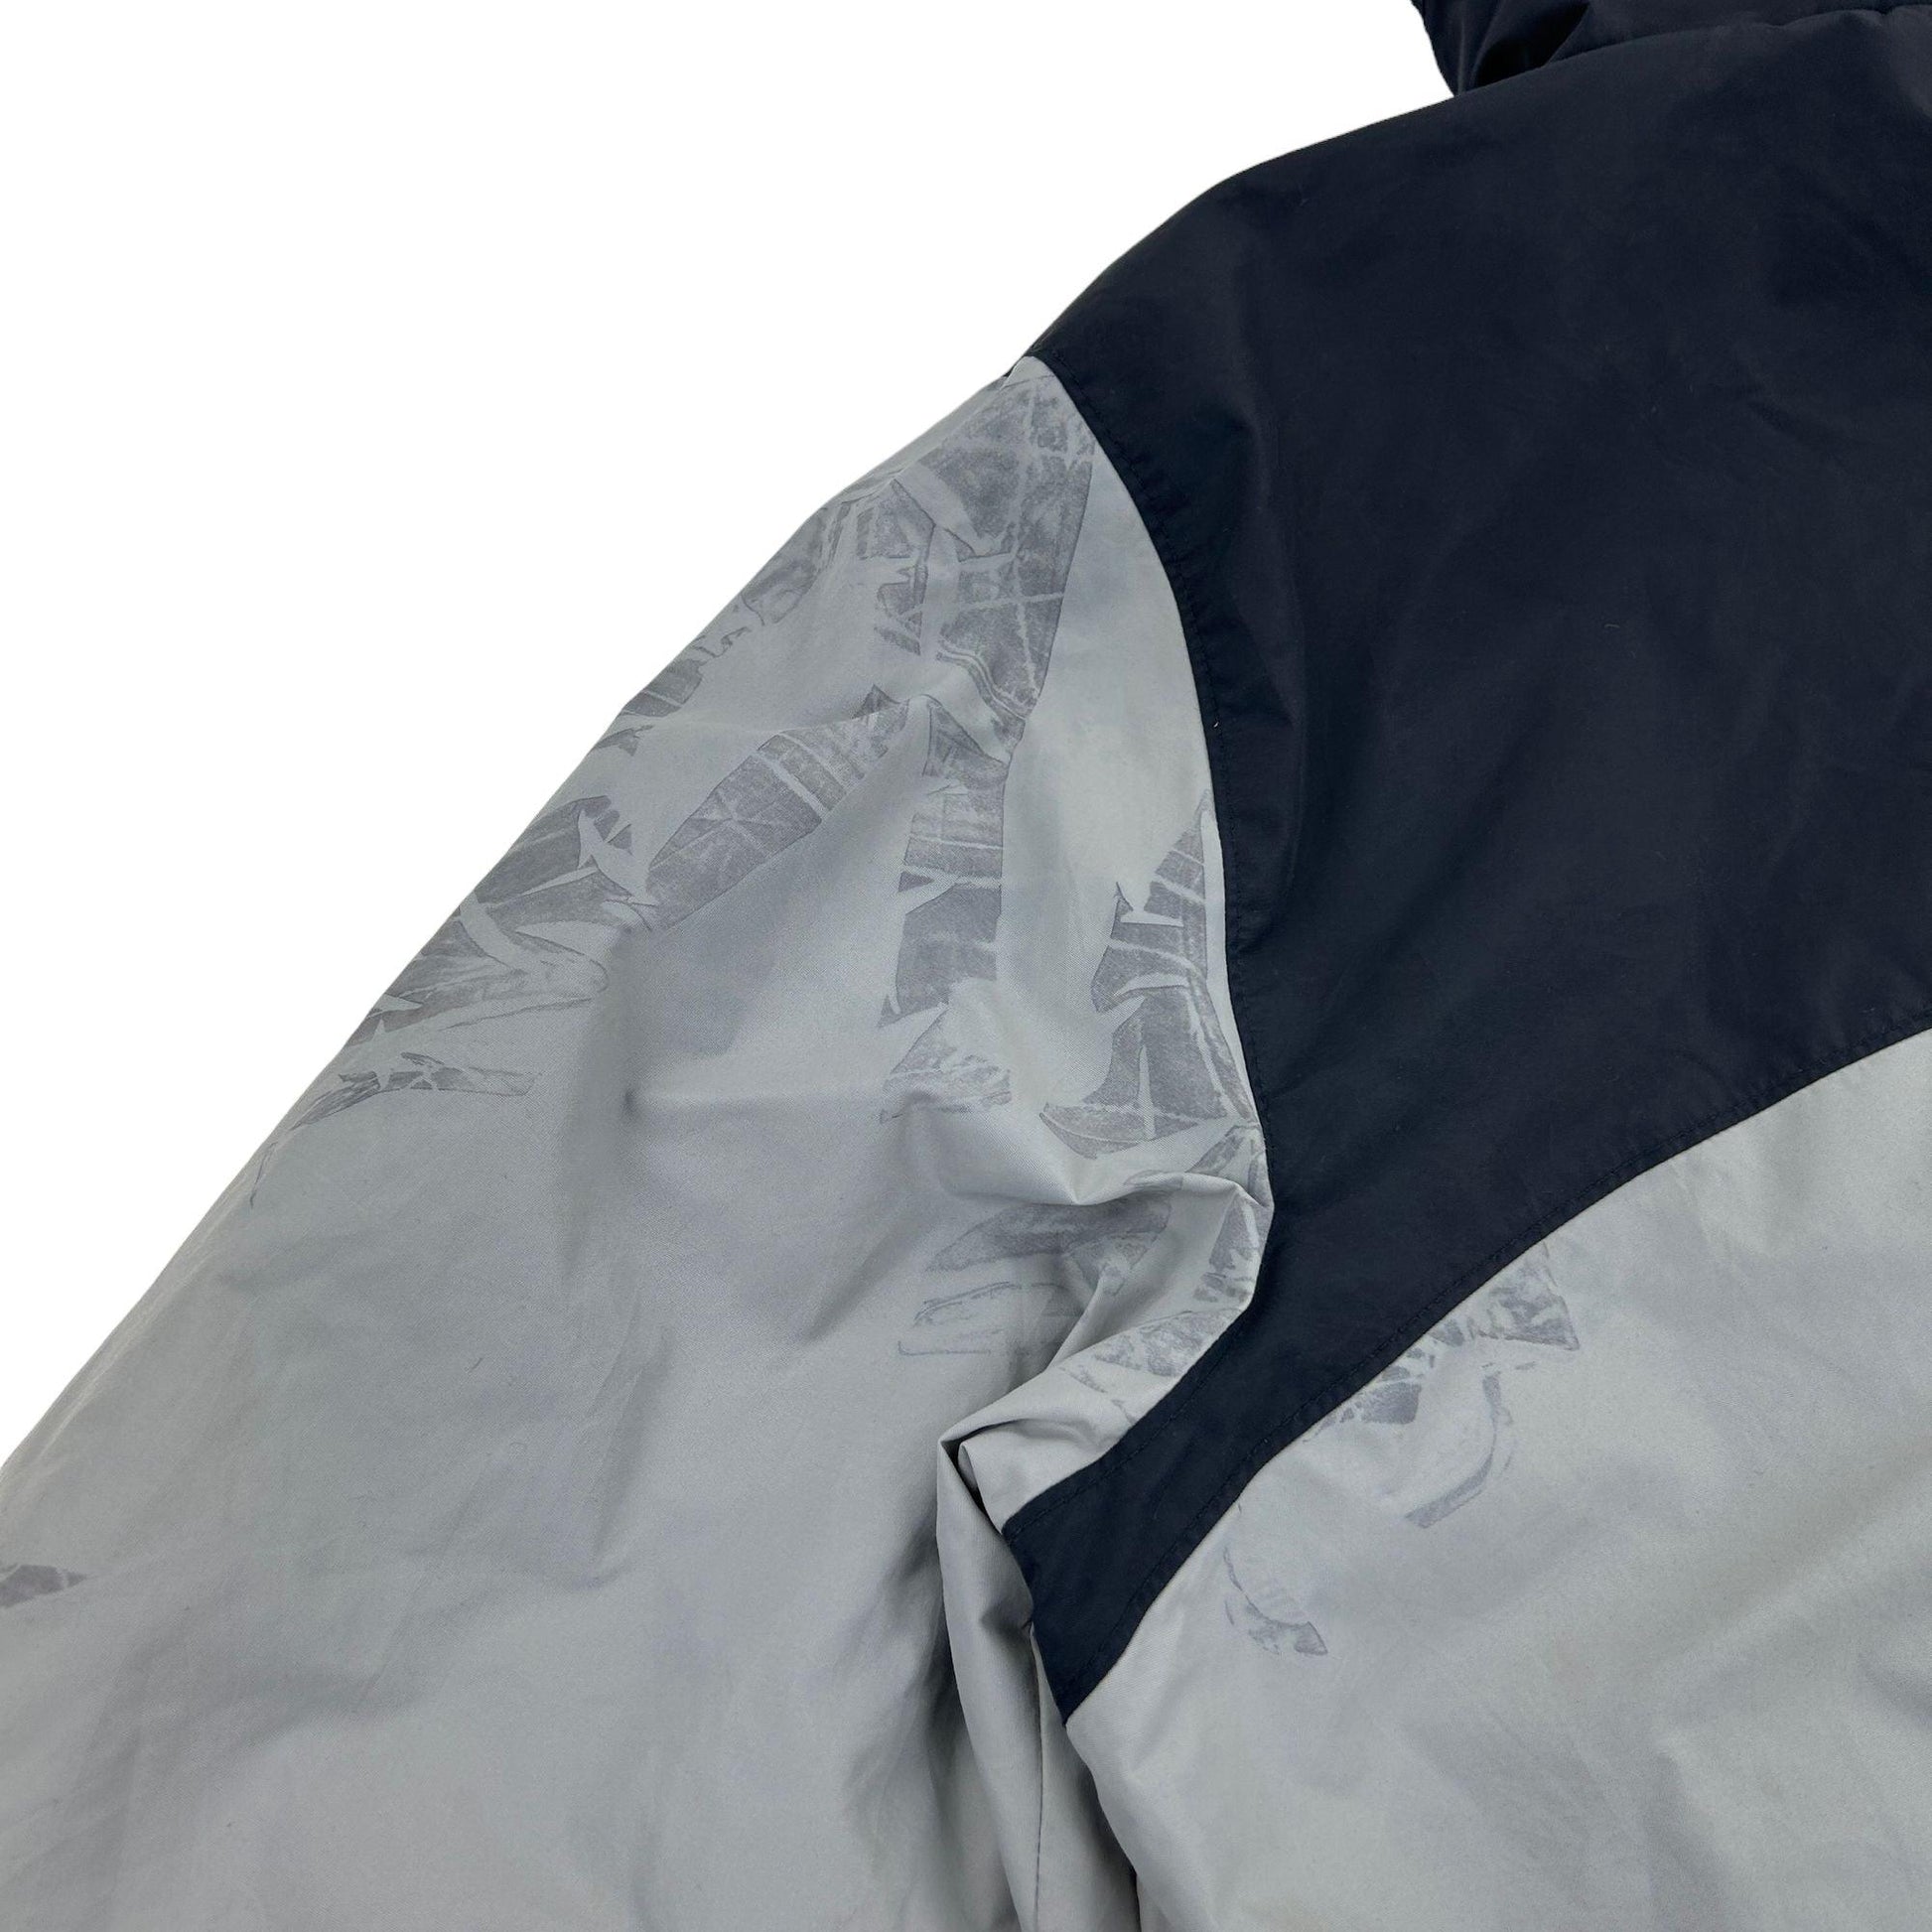 Vintage Nike Hooded Fleece Lined Jacket Size L - Known Source